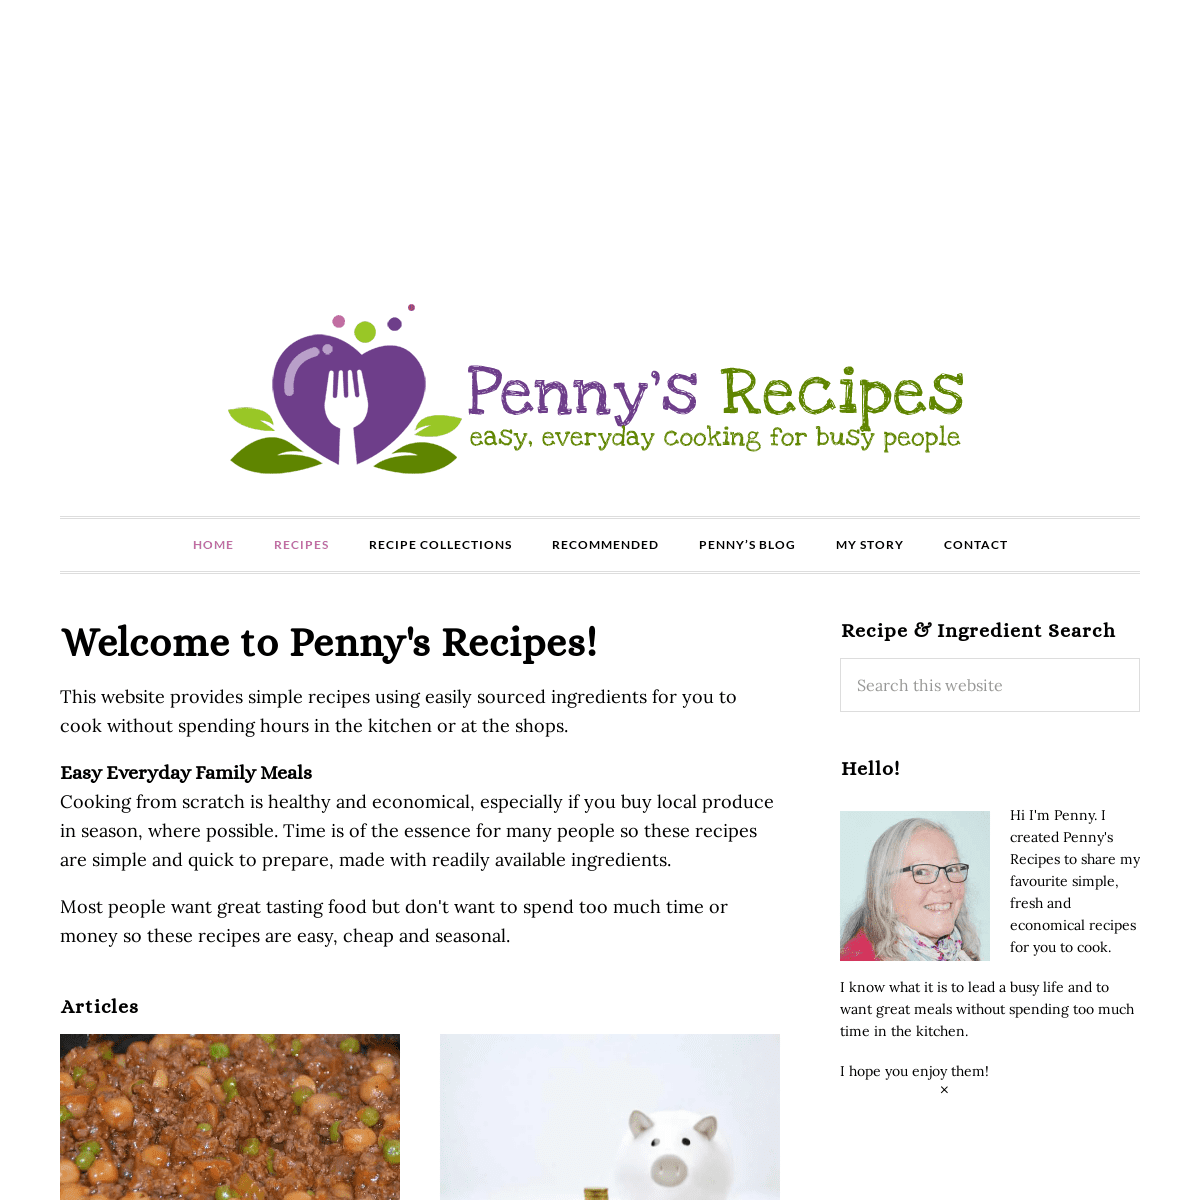 A complete backup of https://pennysrecipes.com